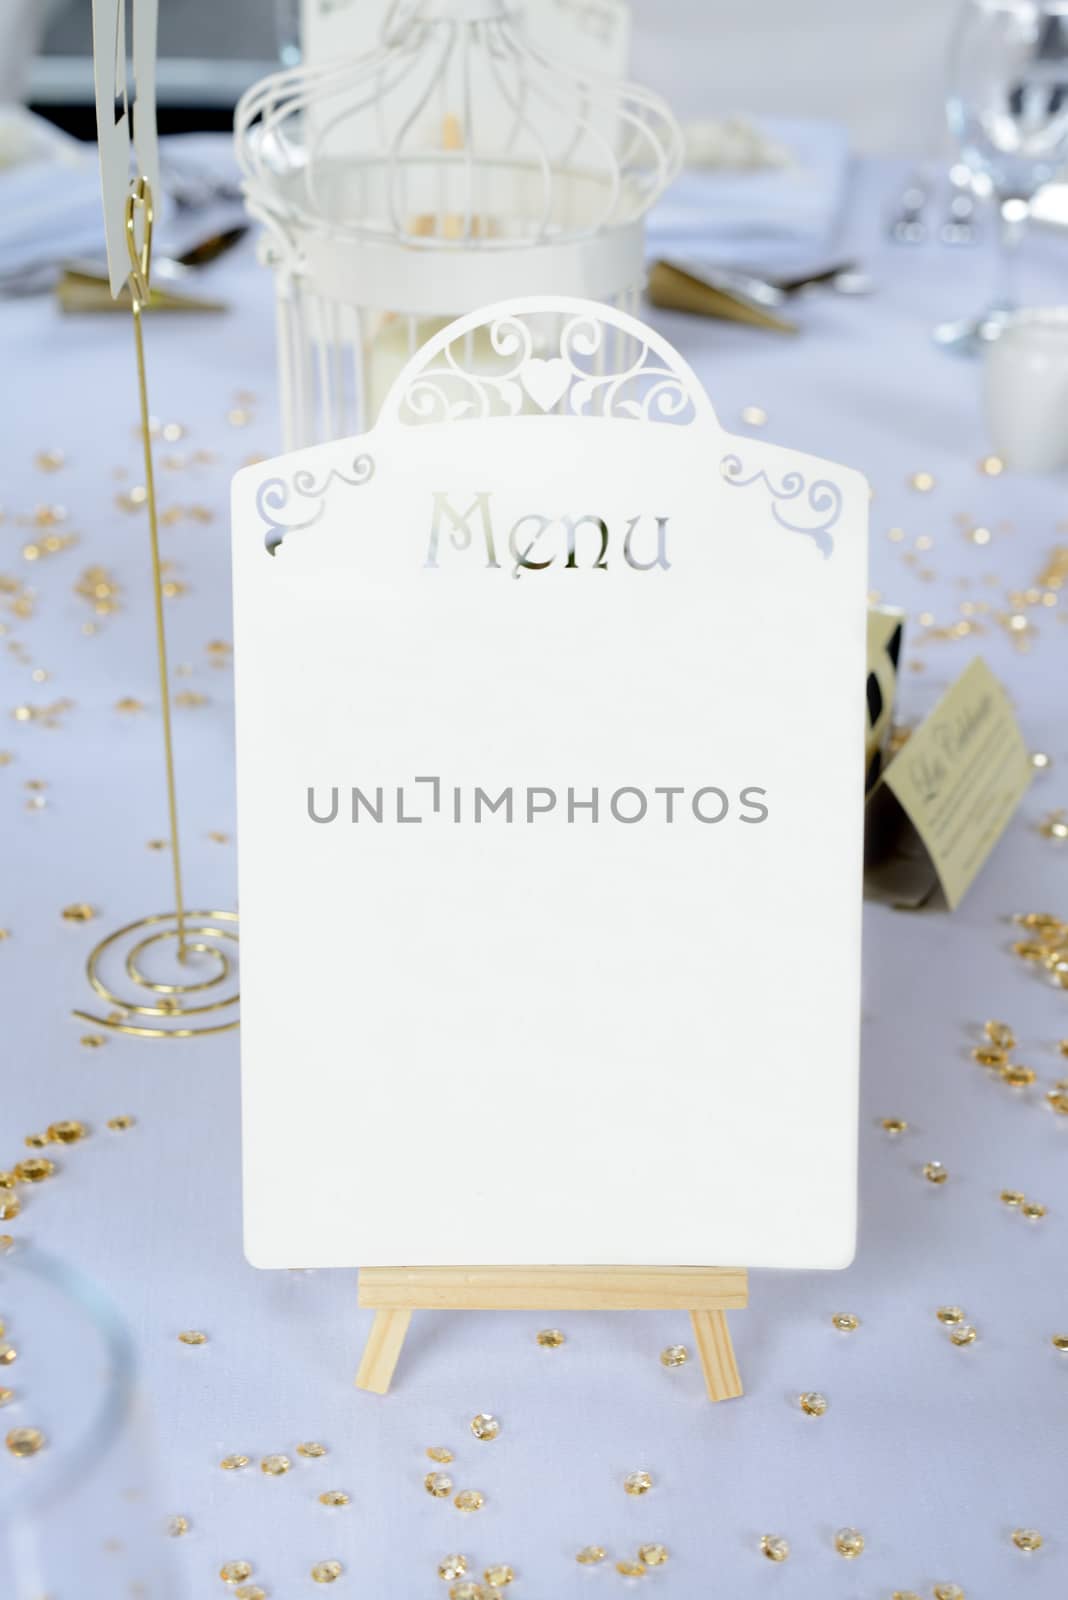 Wedding reception table details with menu closeup